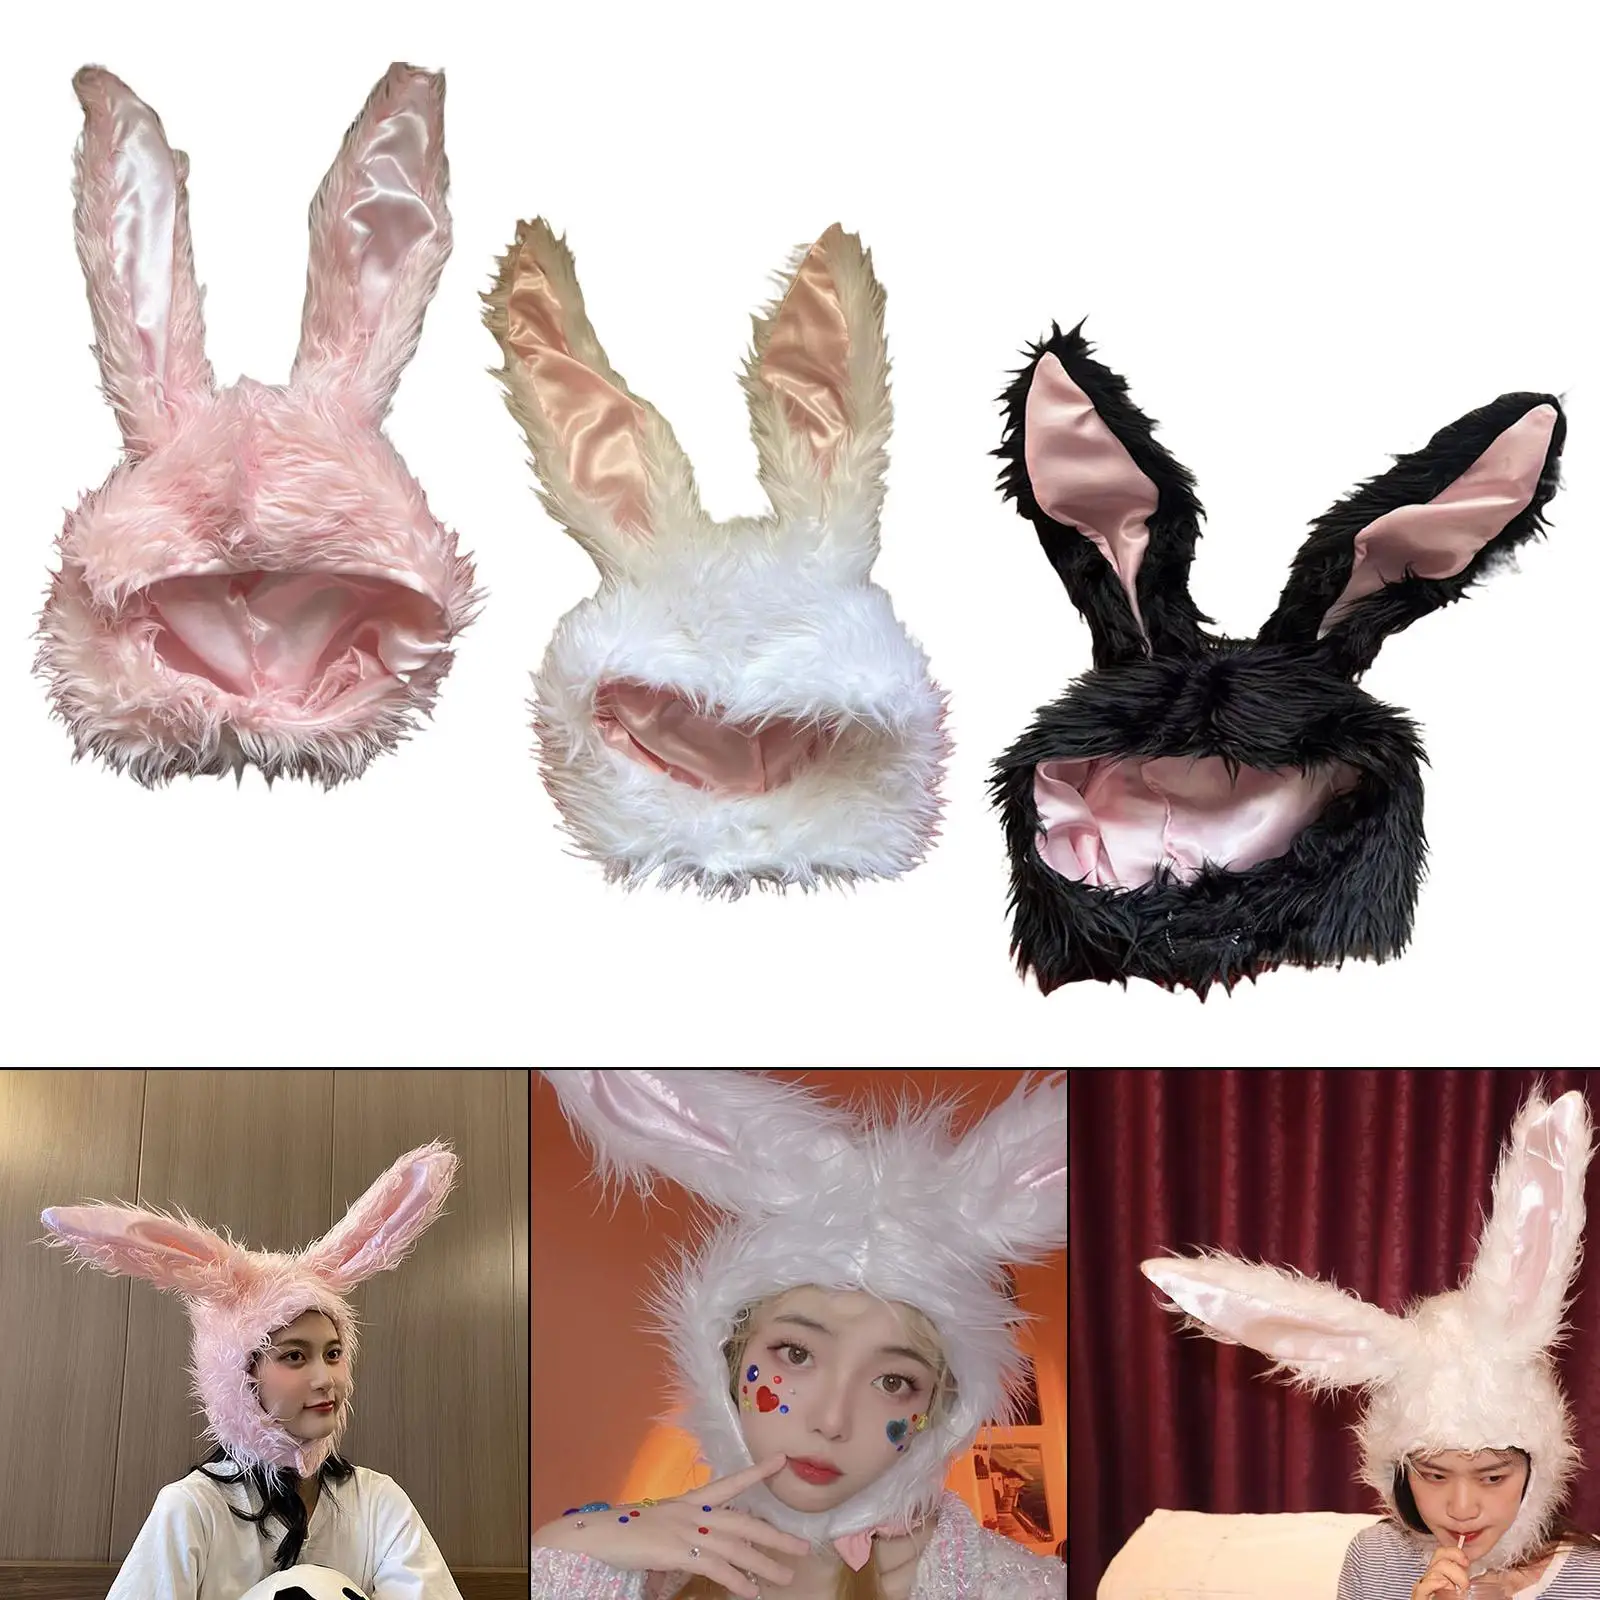   Hats Rabbit Ears Costume Hats for Halloween Christmas Photo Props